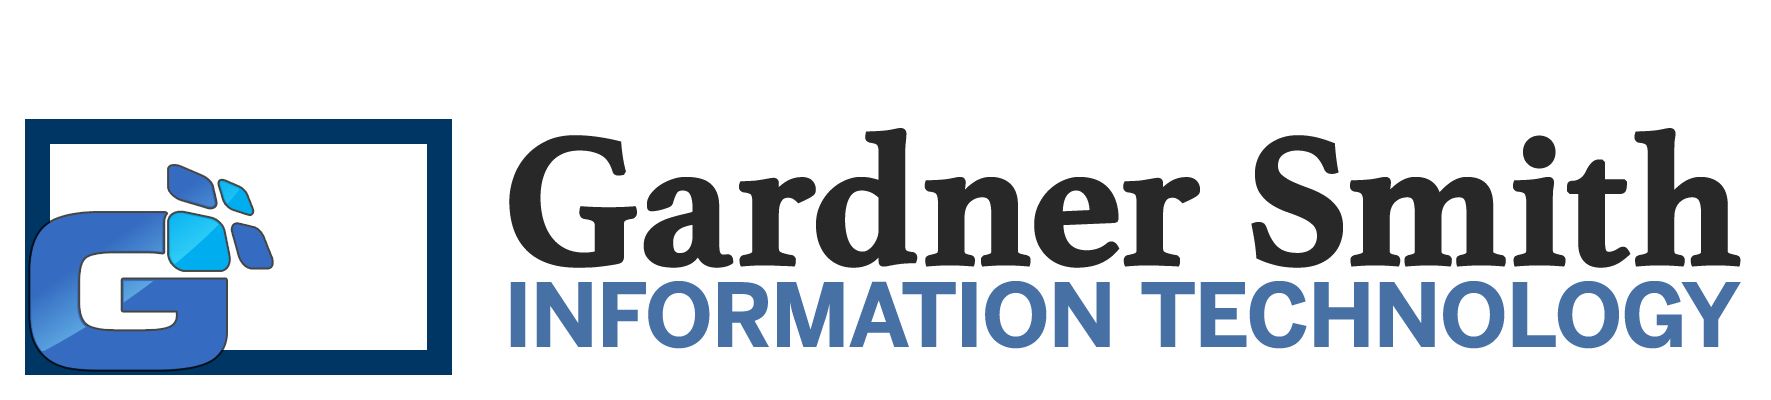 Gardner Smith Information Technology